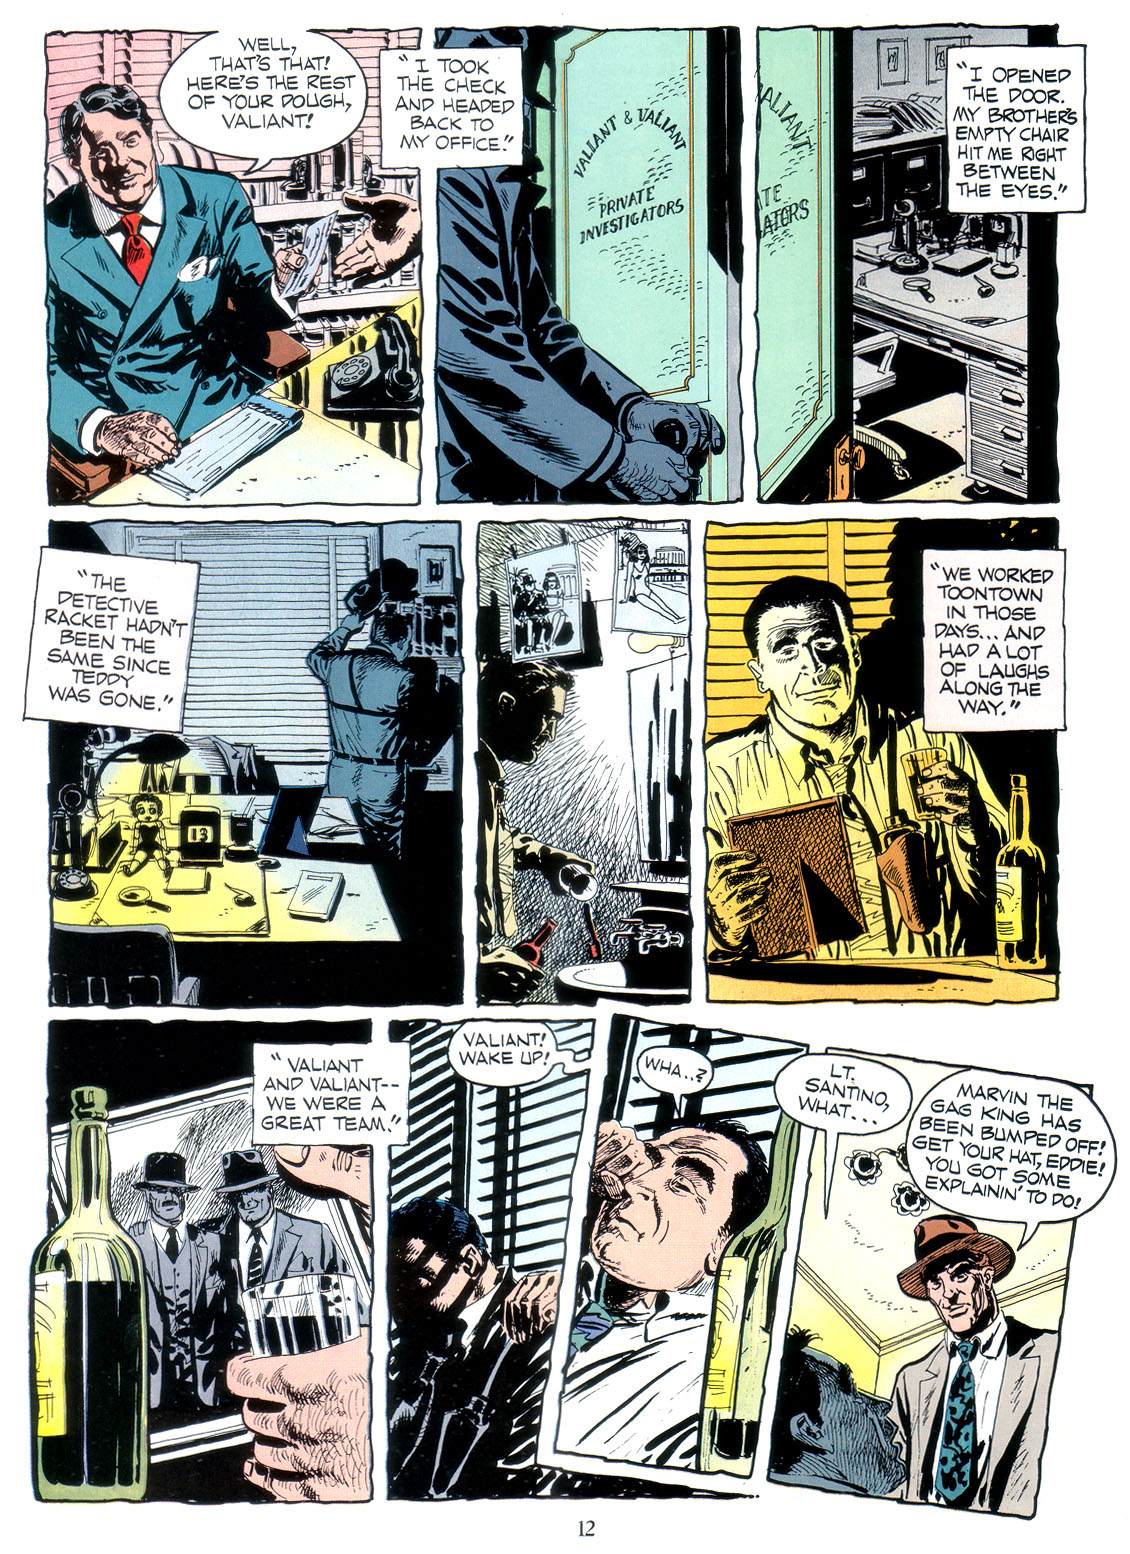 Marvel Graphic Novel issue 41 - Who Framed Roger Rabbit - Page 14